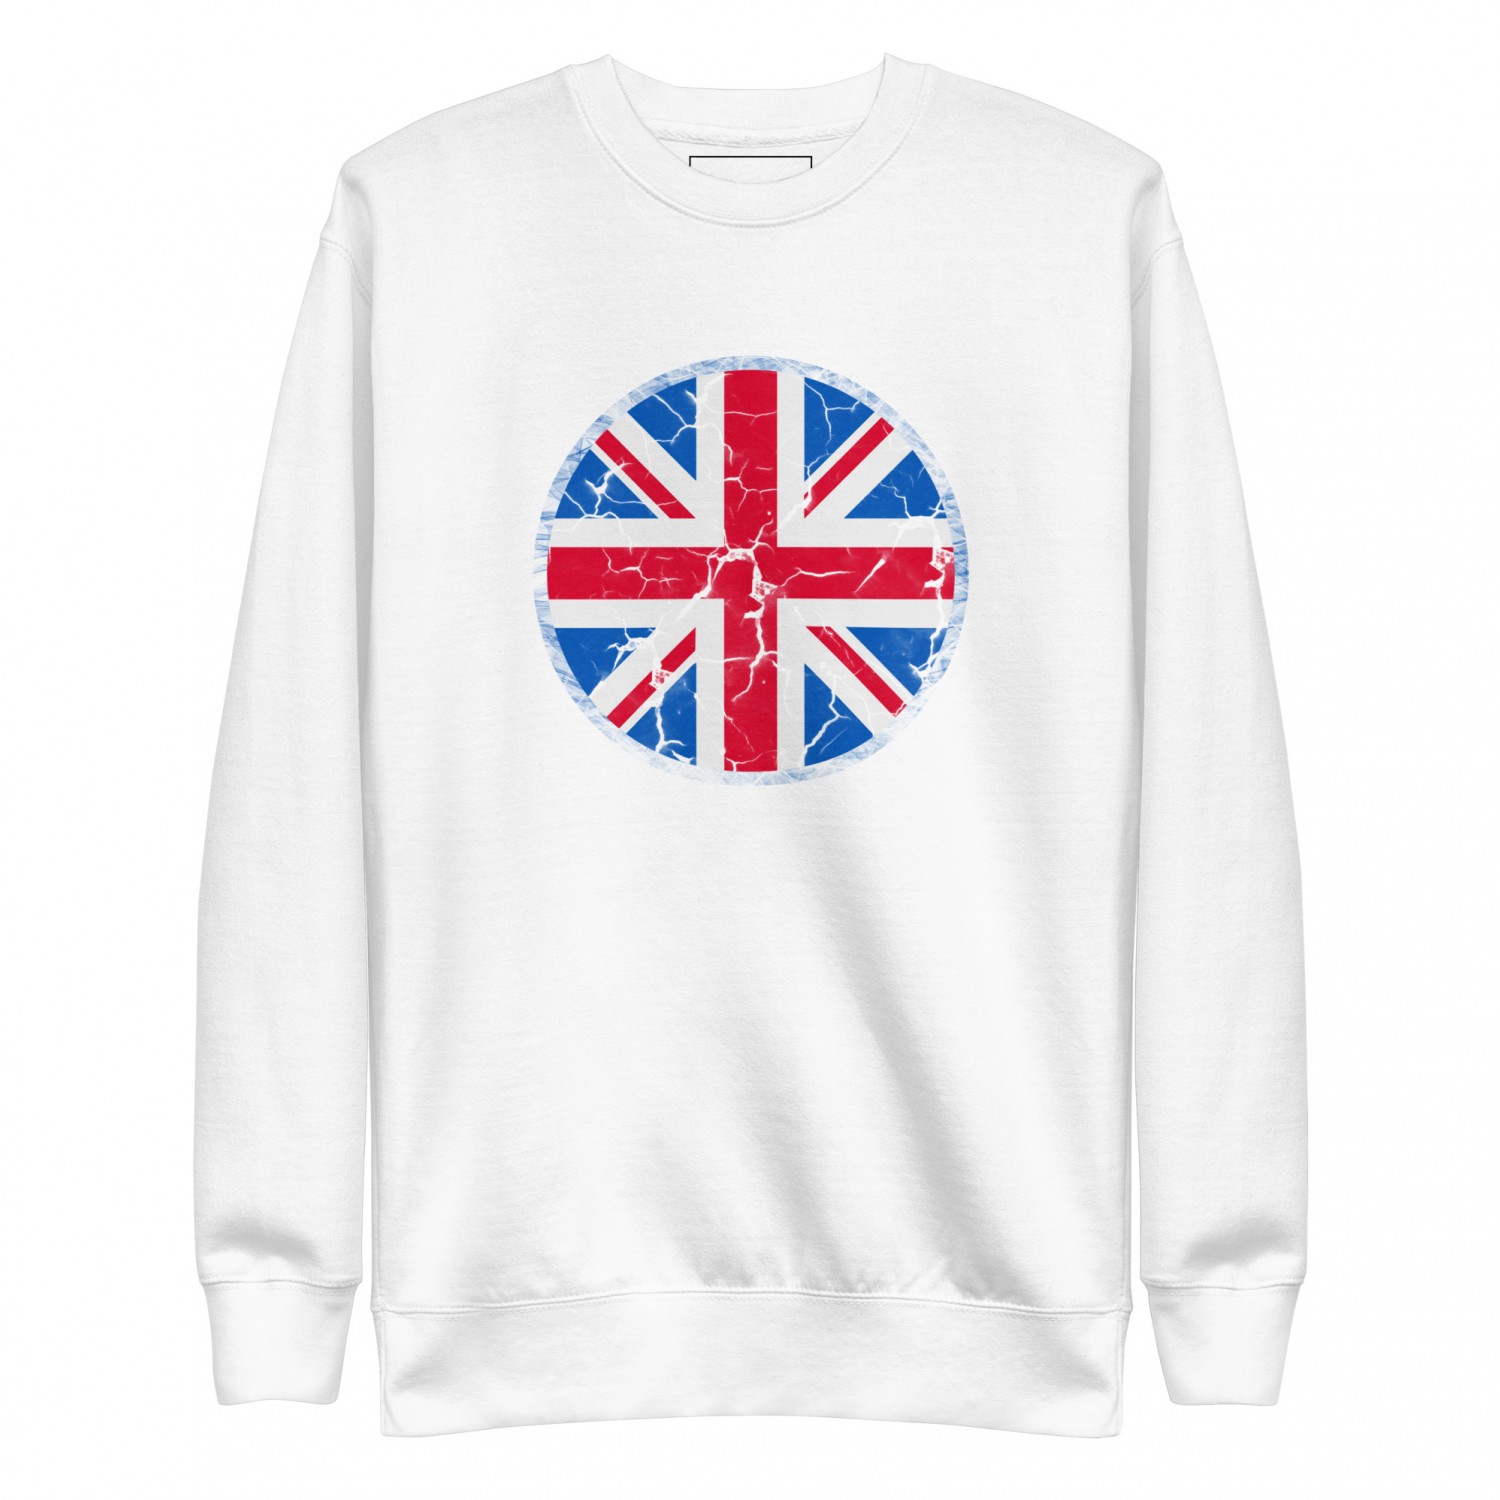 Sweatshirt "Great Britain"